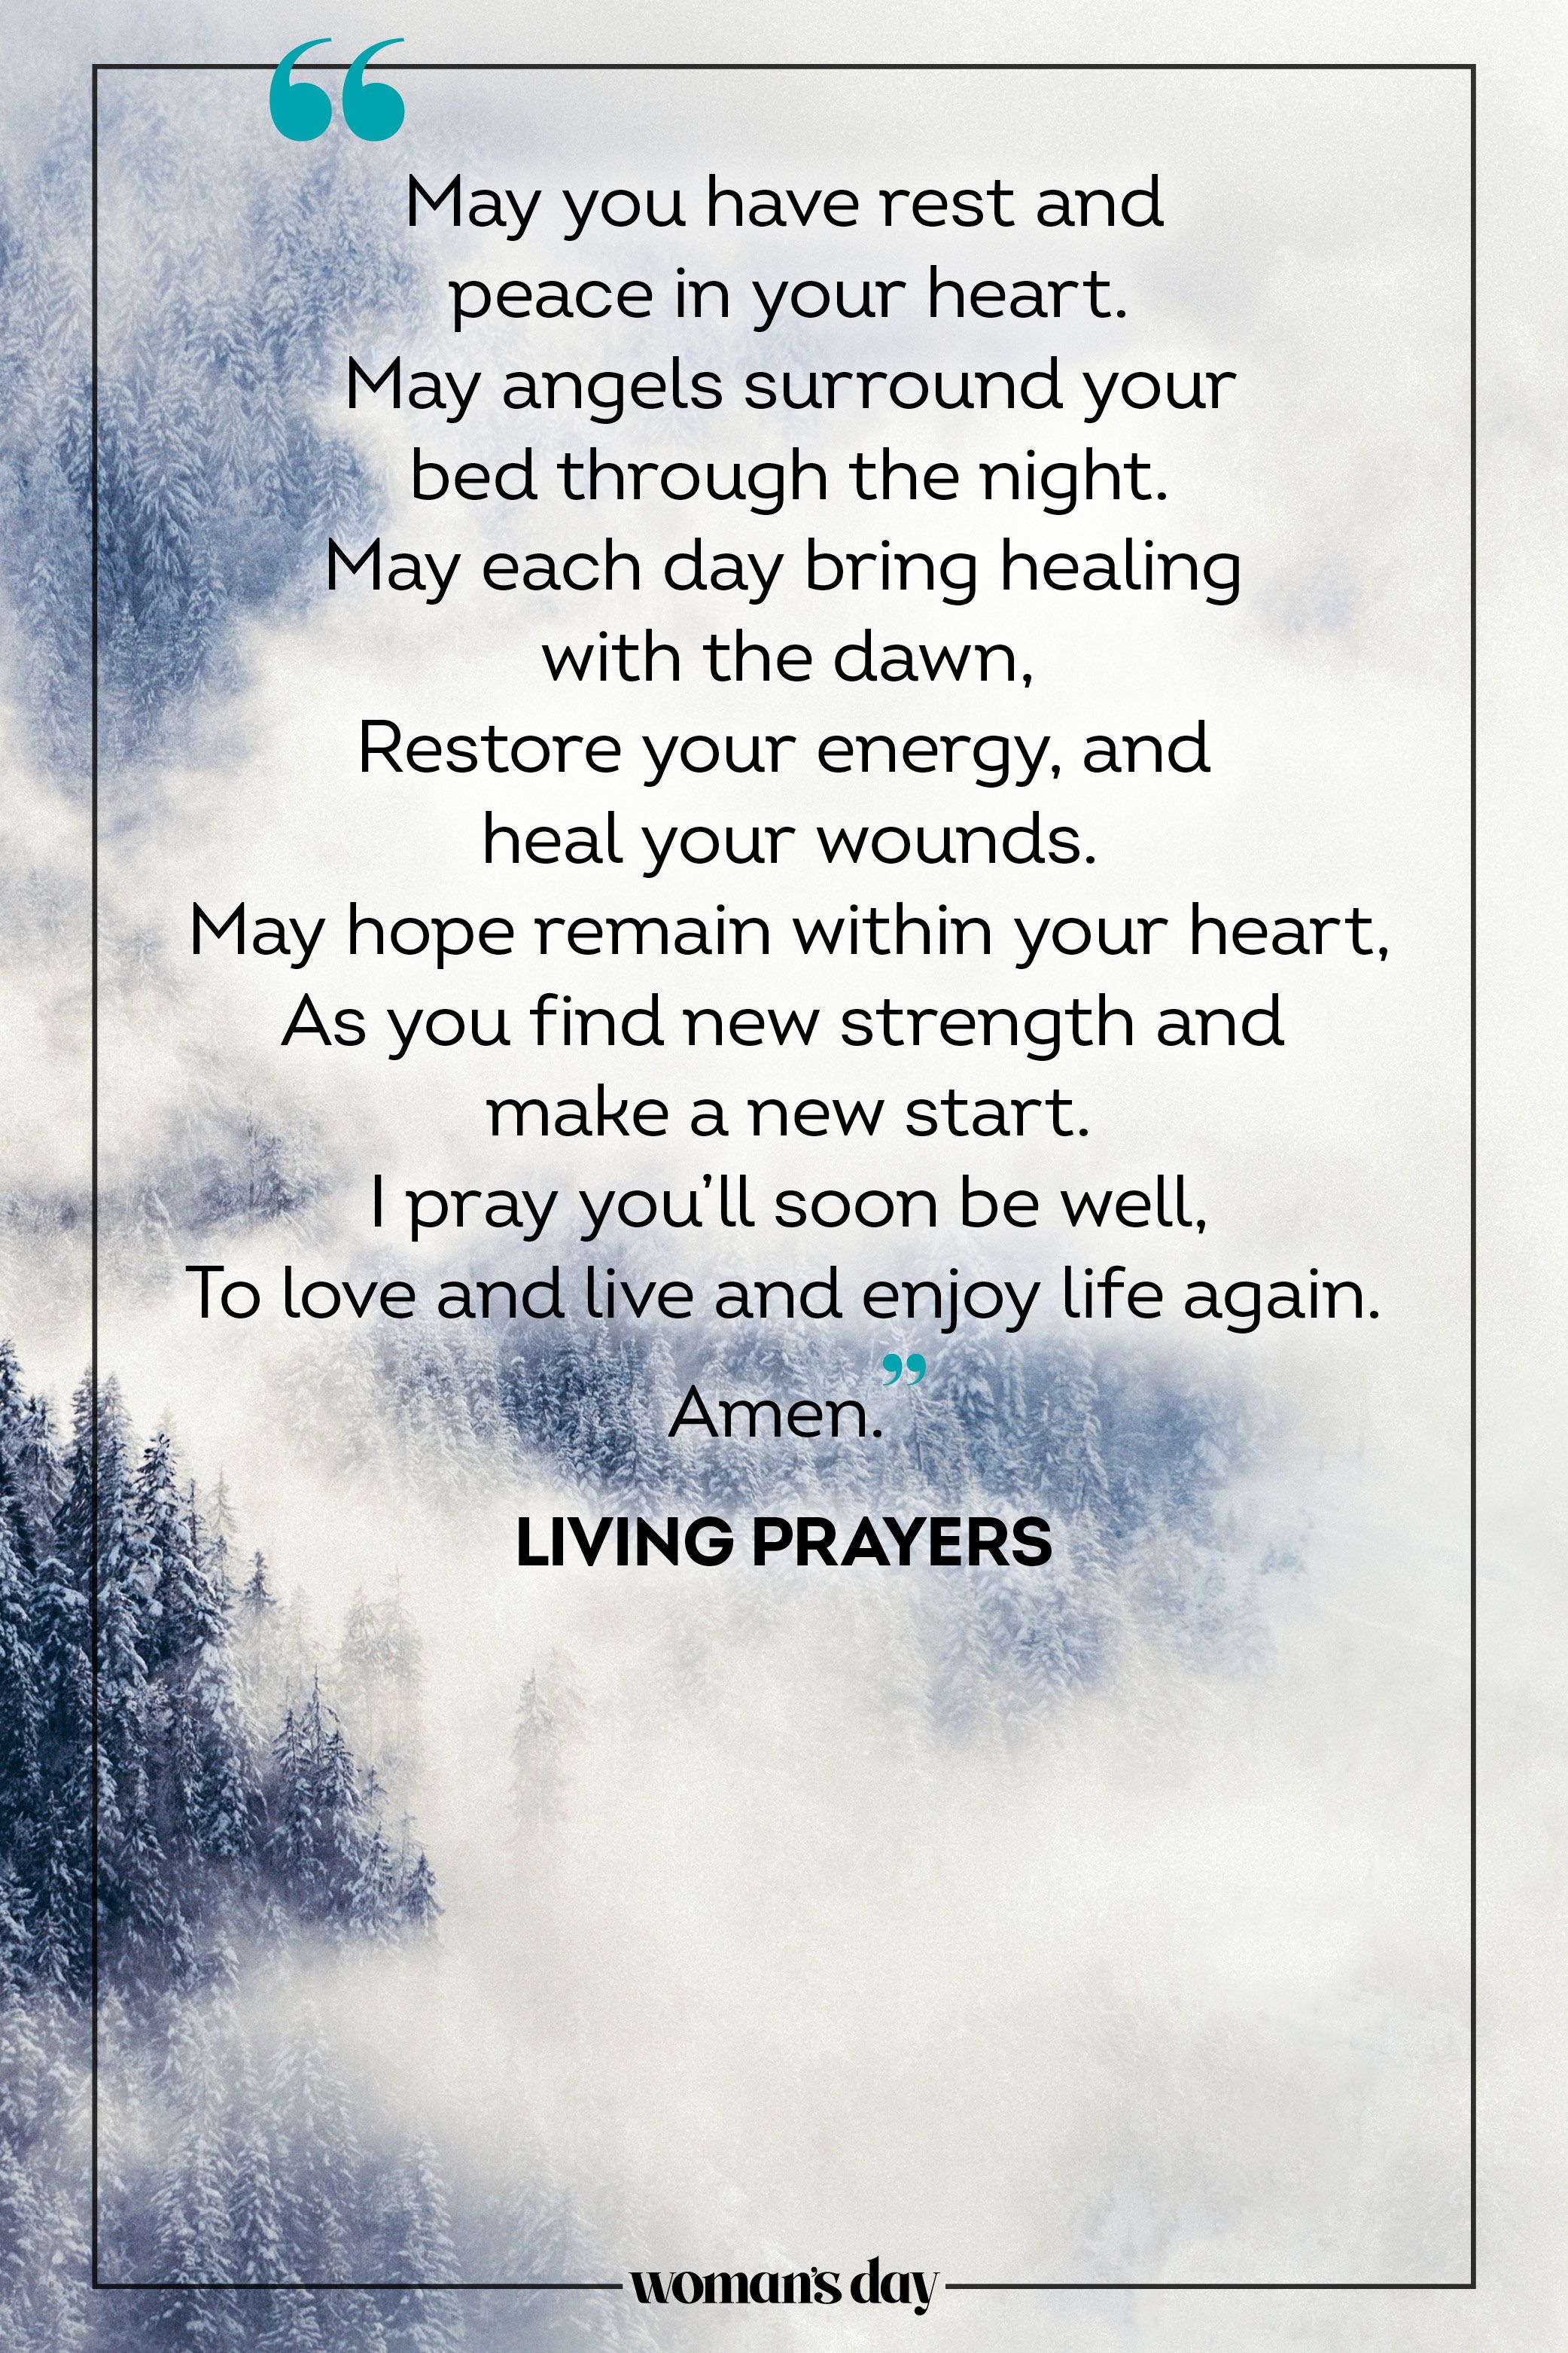 prayer for healing